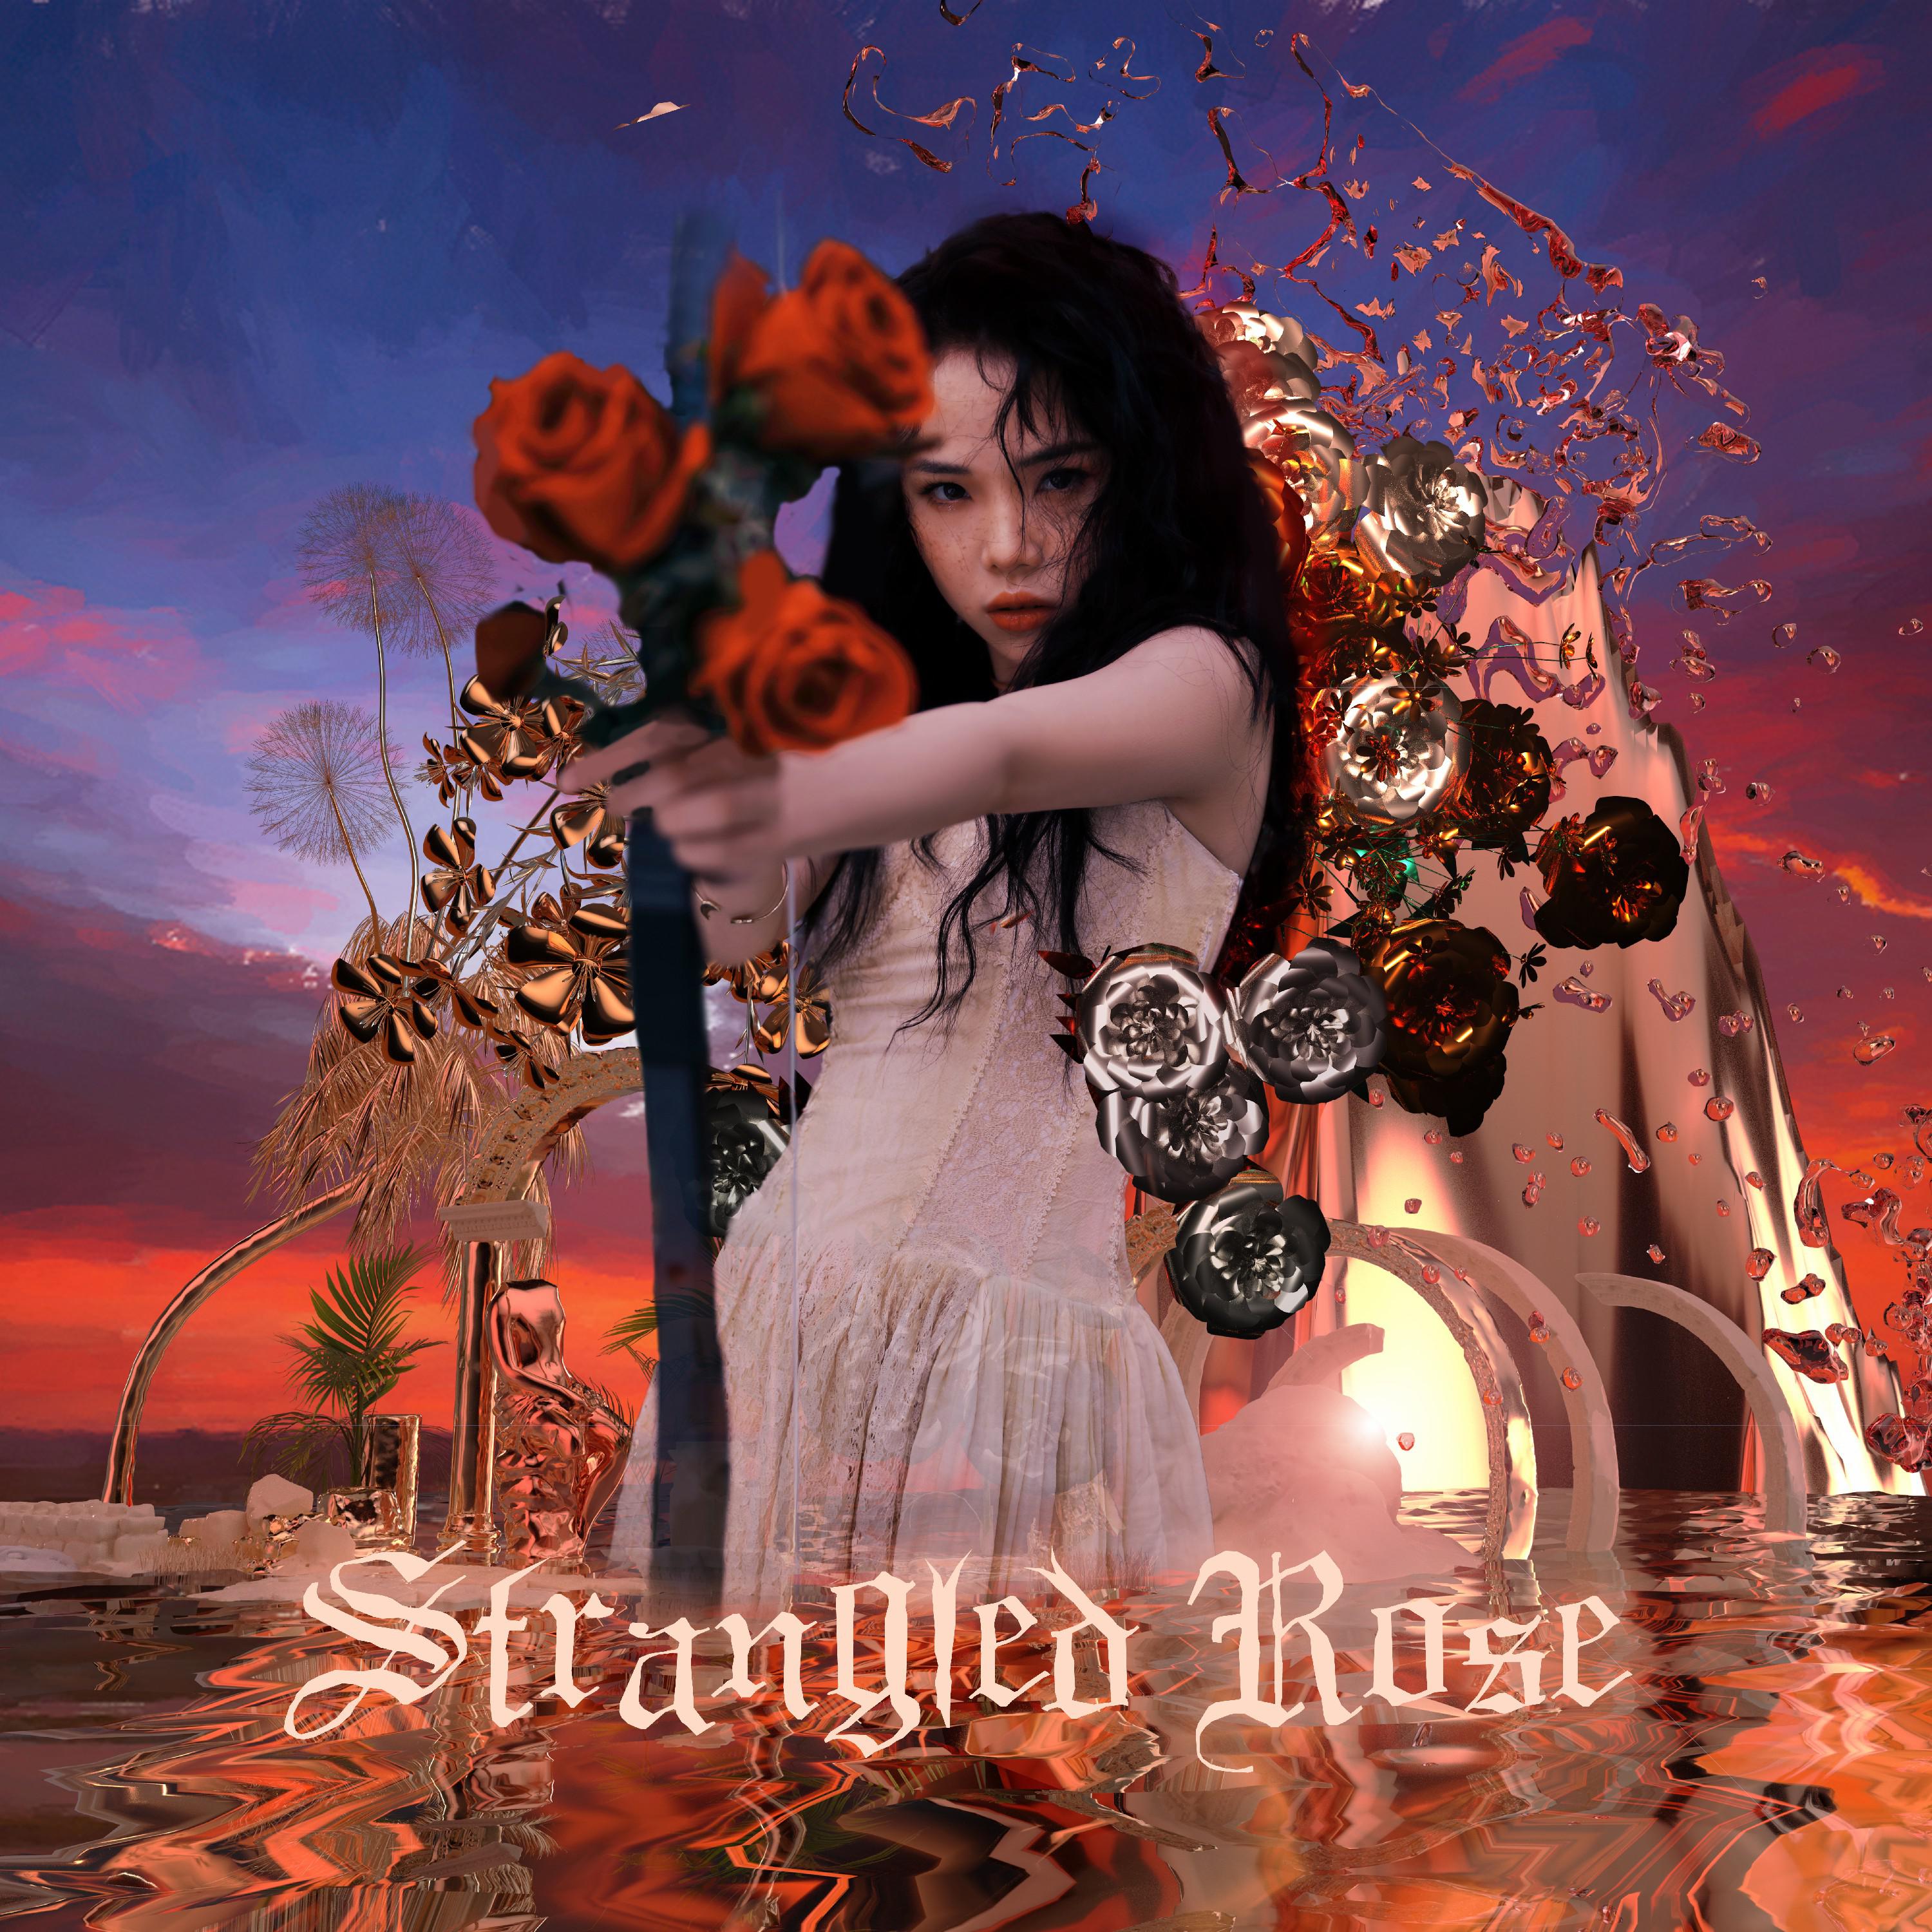 Paradox#歌词 歌手SHARK卫彬月-专辑Strangled Rose-单曲《Paradox#》LRC歌词下载